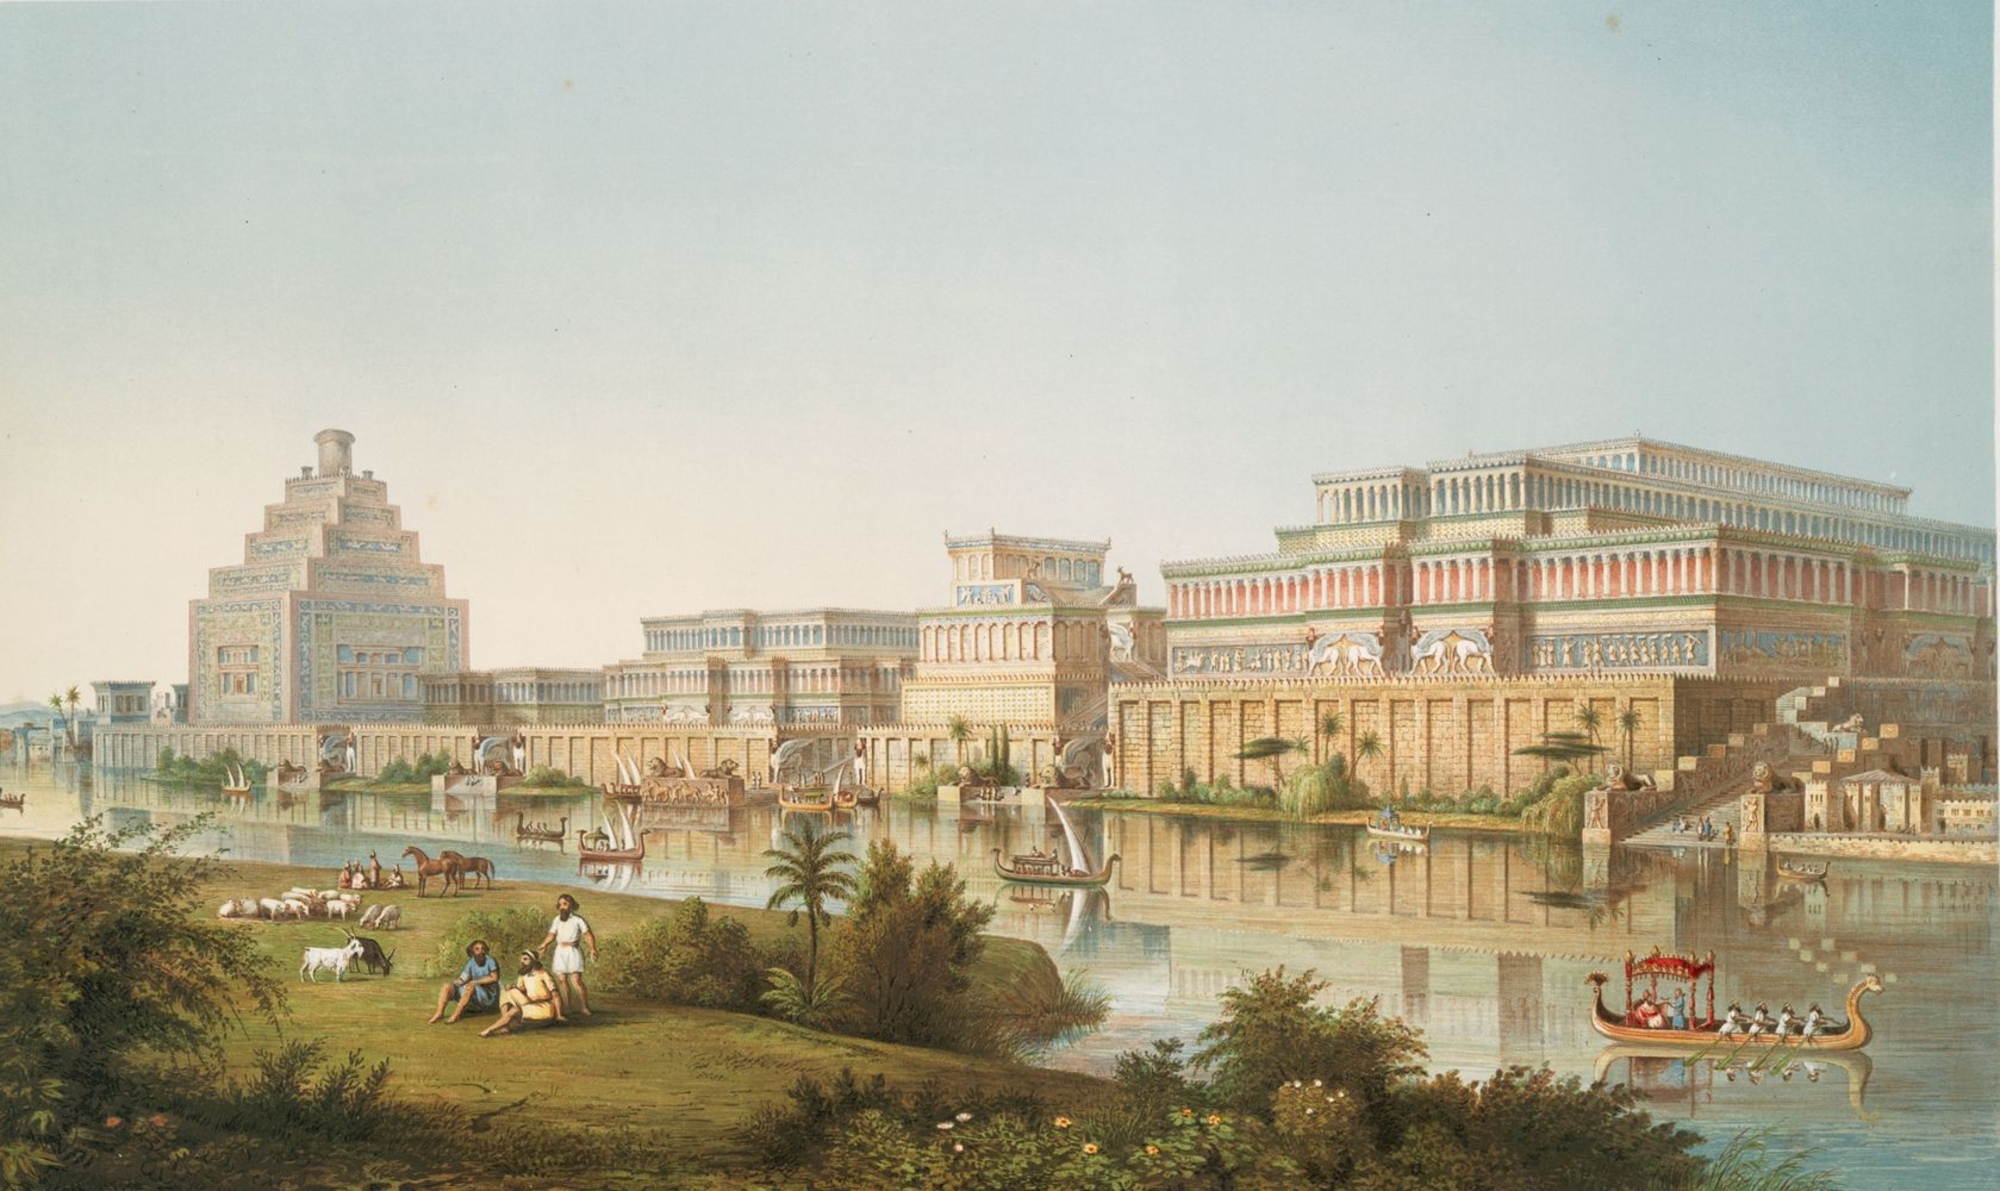 Restauration du palais de Nimrud selon Layard